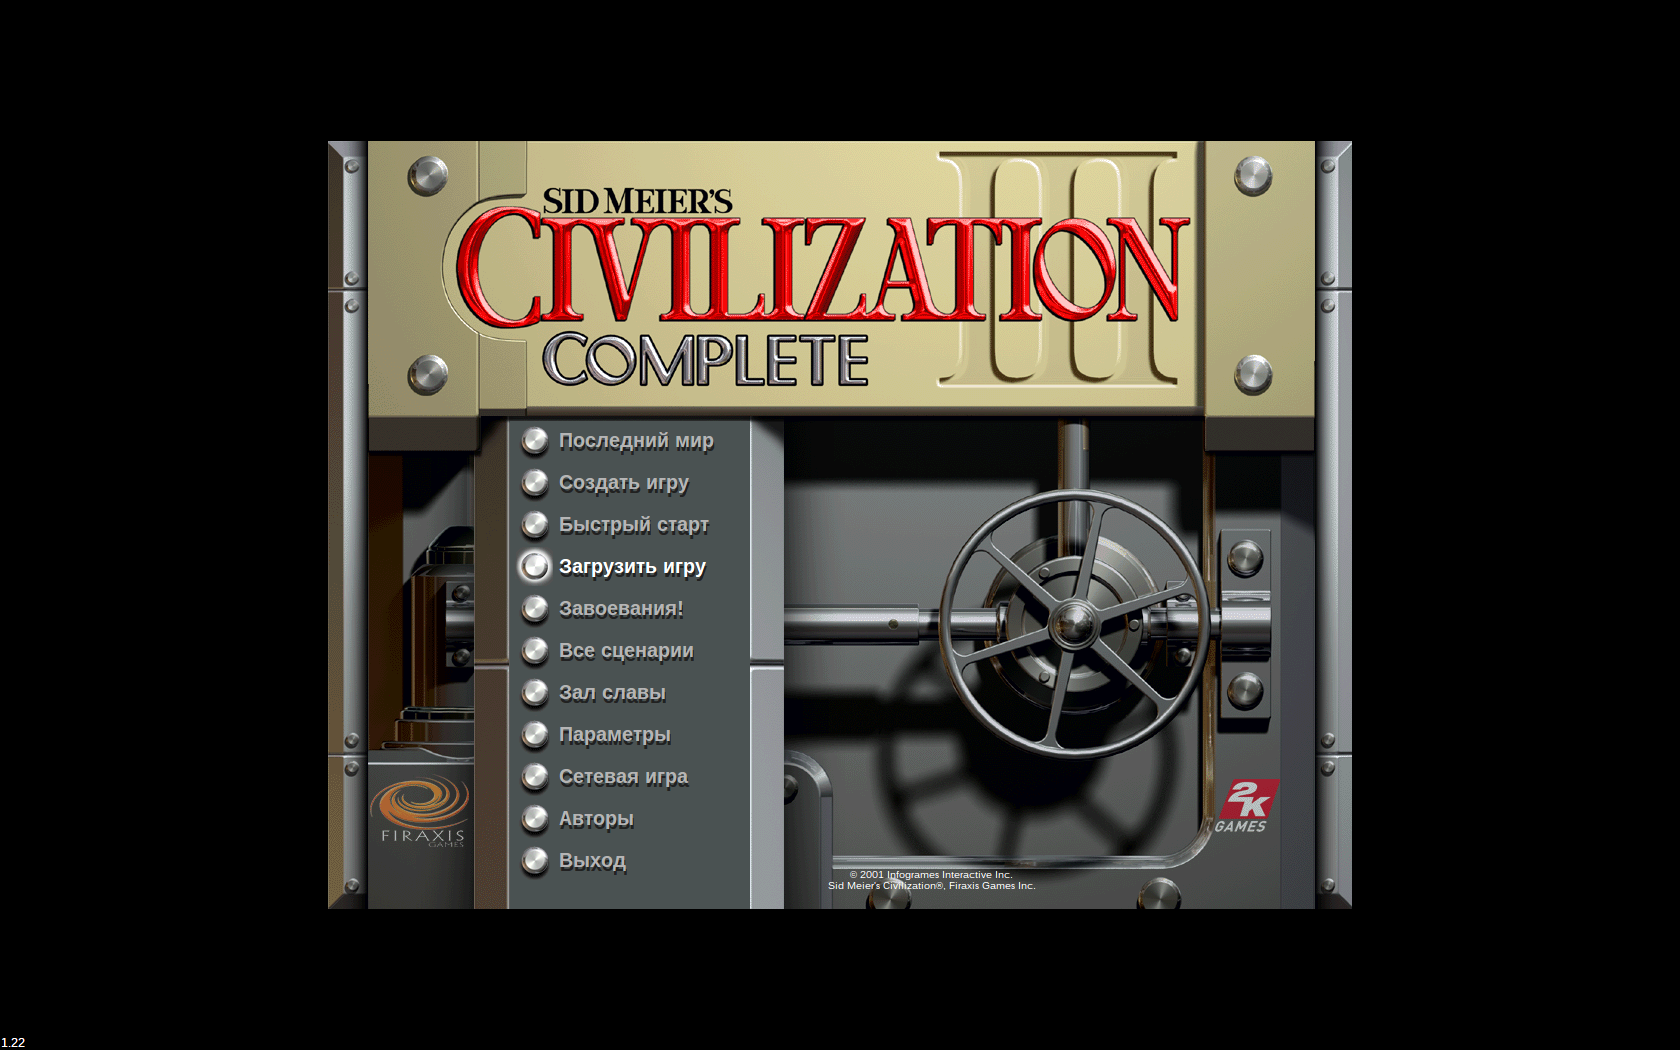 Sid Meiers Civilization Iii Complete Guide 9 image 2